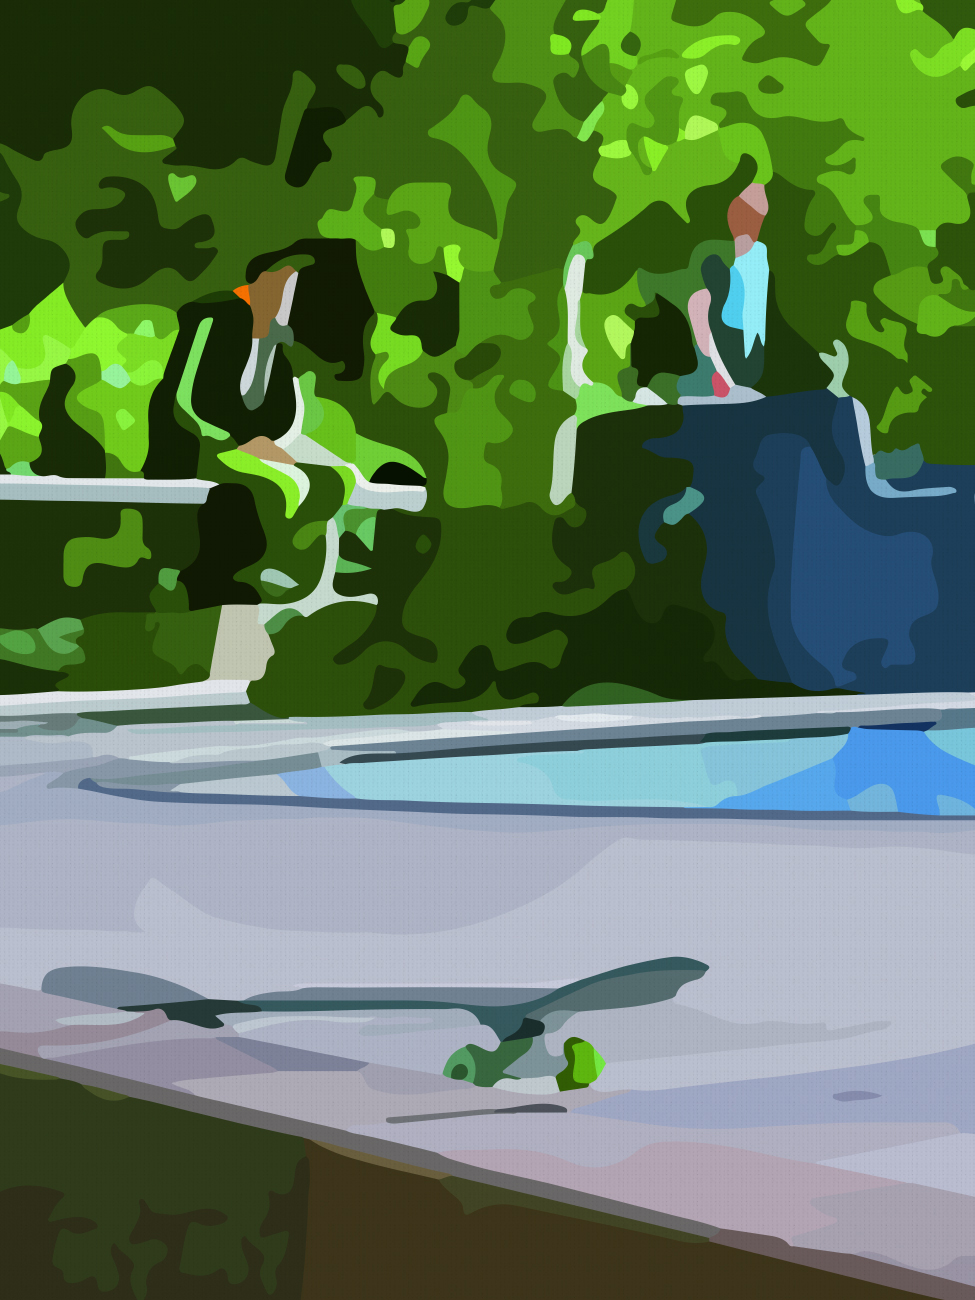 The pool - Artwork of amsterdamoncanvas.com